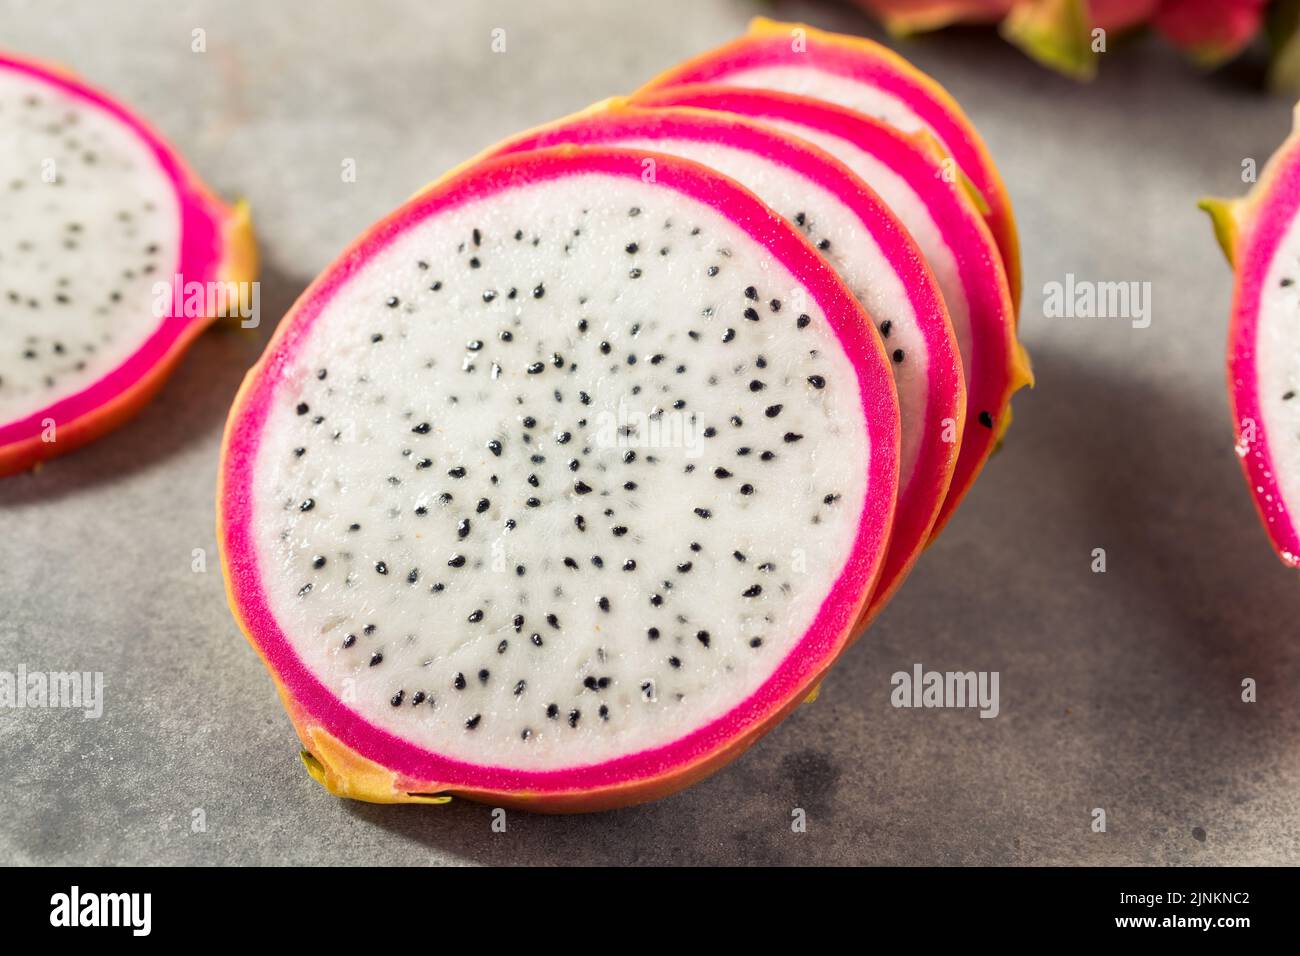 Healthy Organic Thai Dragonfruit Pitaya Cut into Slices Stock Photo